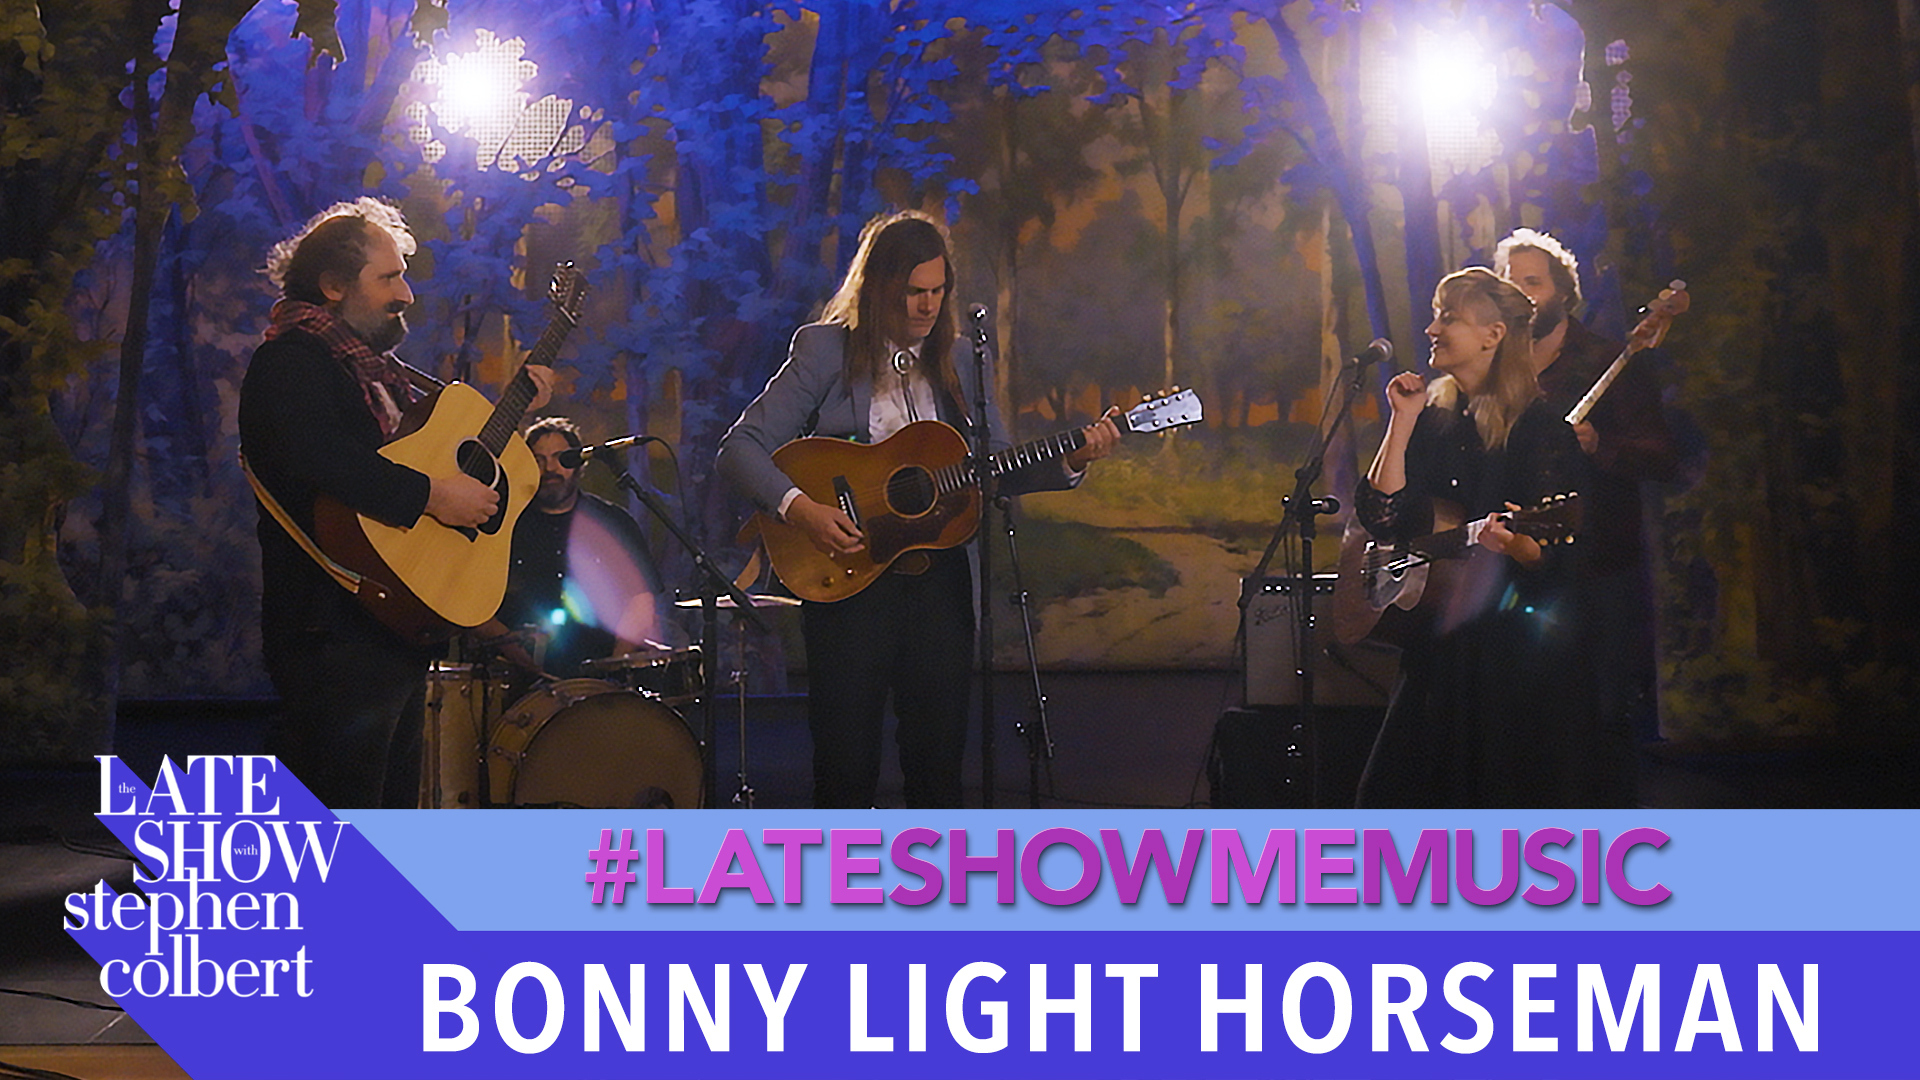 Watch Late Show with Colbert: "California" Bonny Light Horseman - Full show on CBS